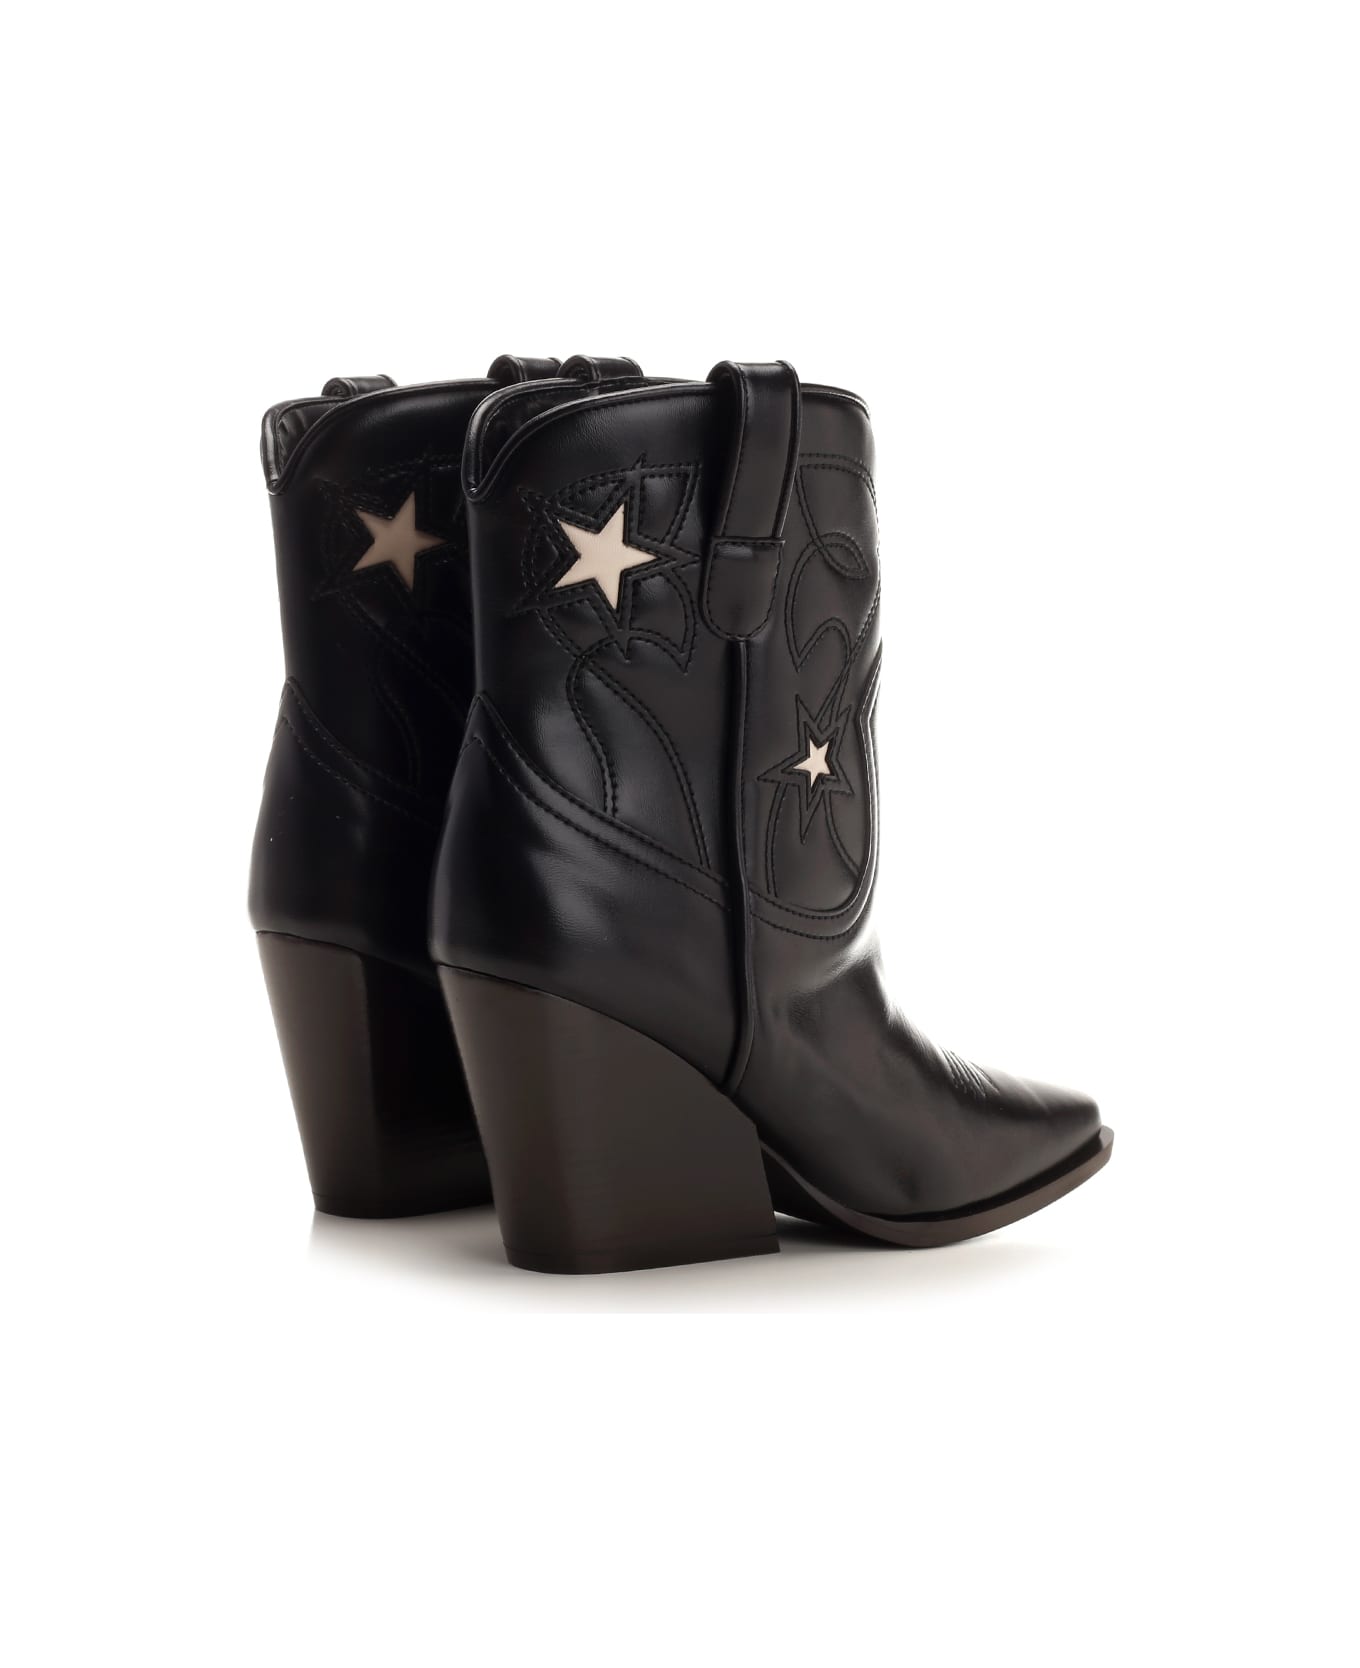 Stella McCartney Cowboy Ankle Boots - BLACK/STONE